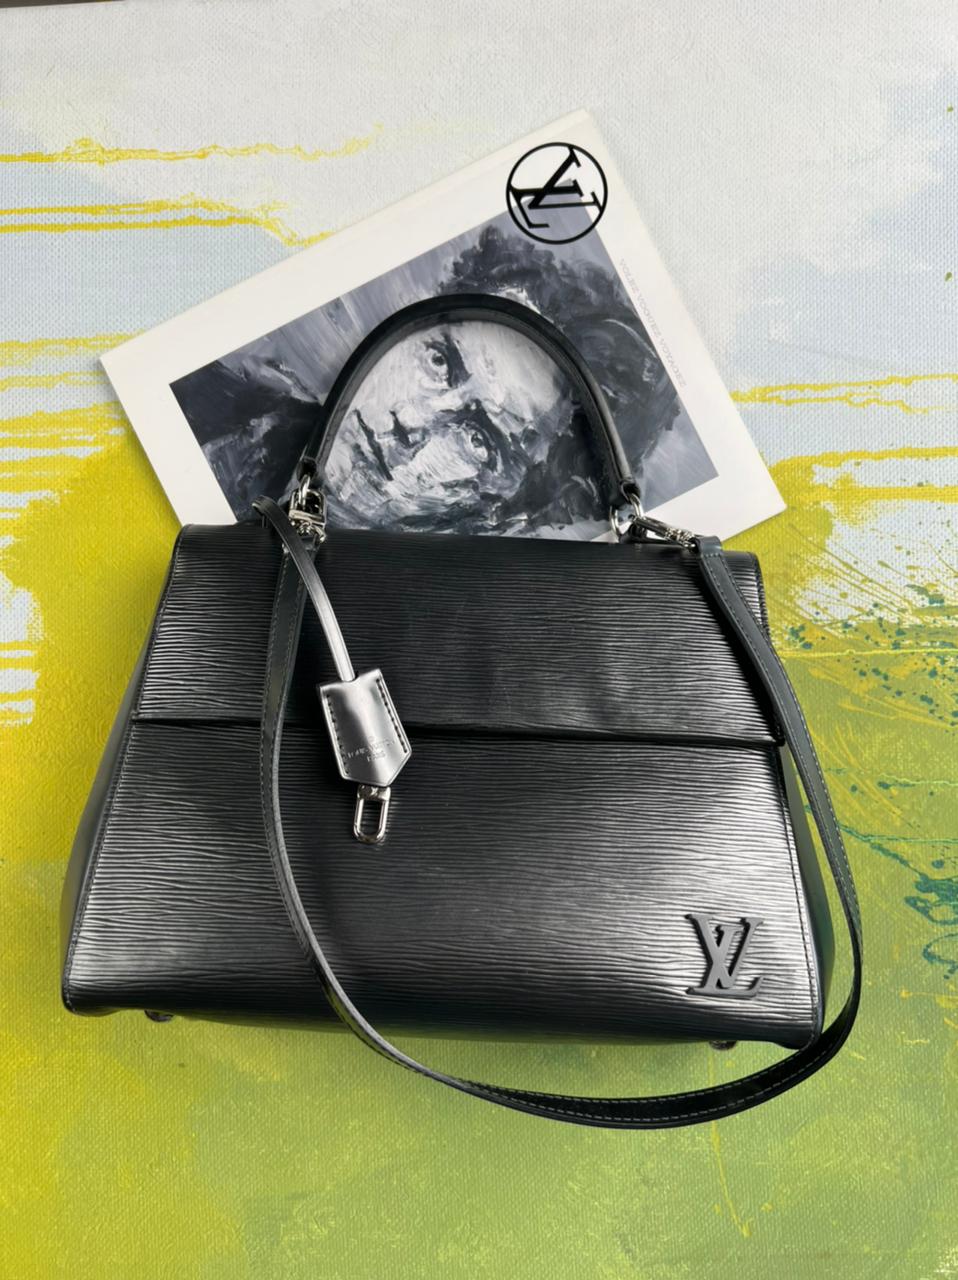 Скидка ❗  Louis Vuitton сумка Pallas MM